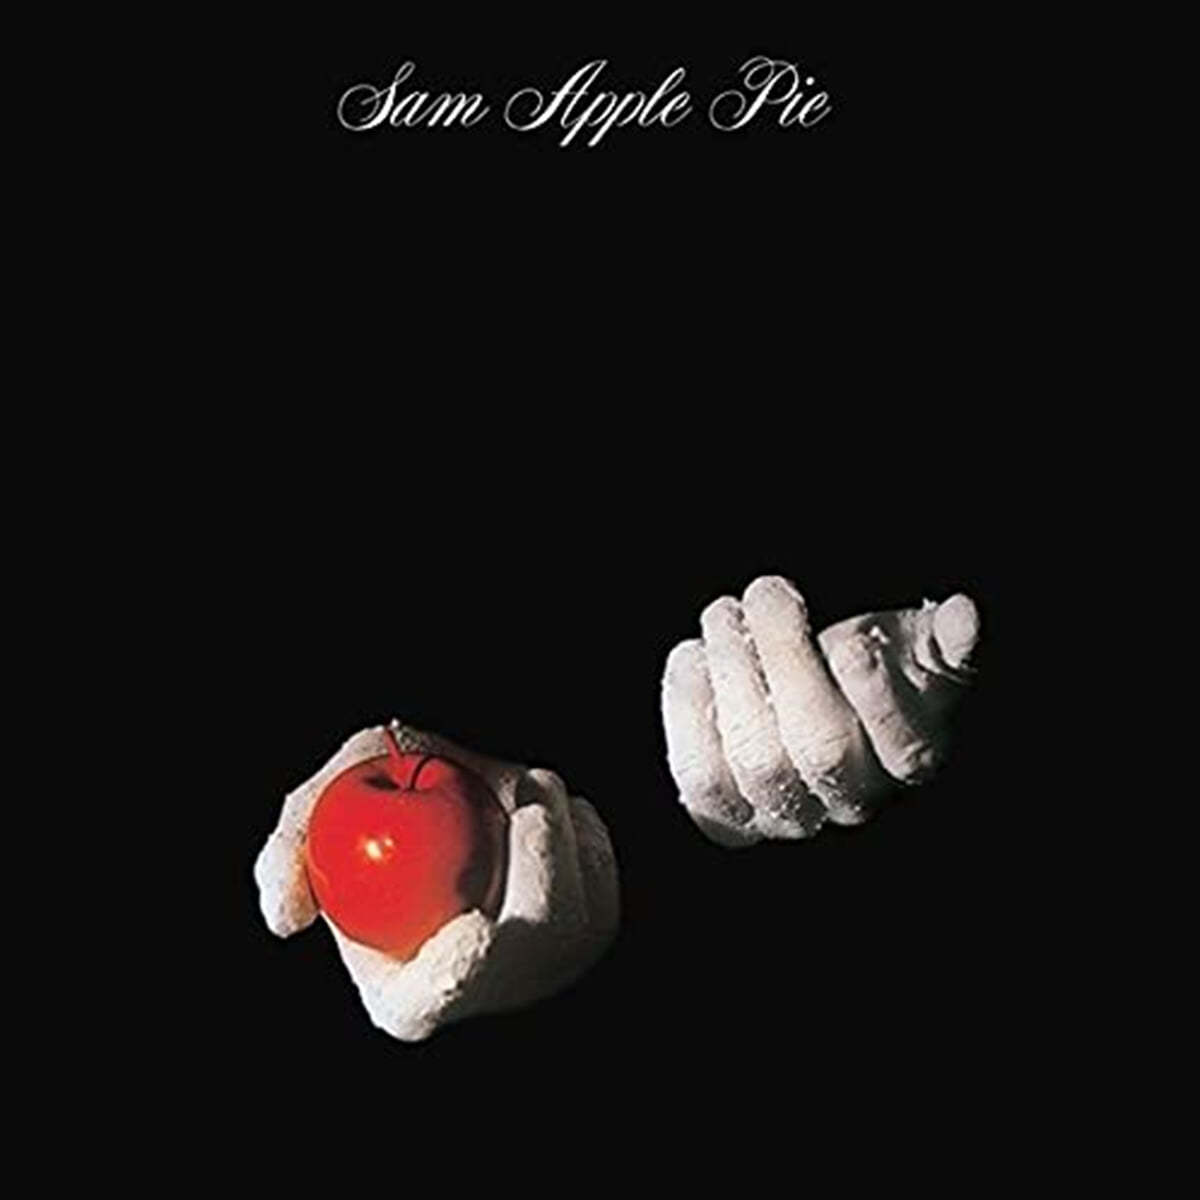 Sam Apple Pie (샘 애플 파이) - Sam Apple Pie [LP] 